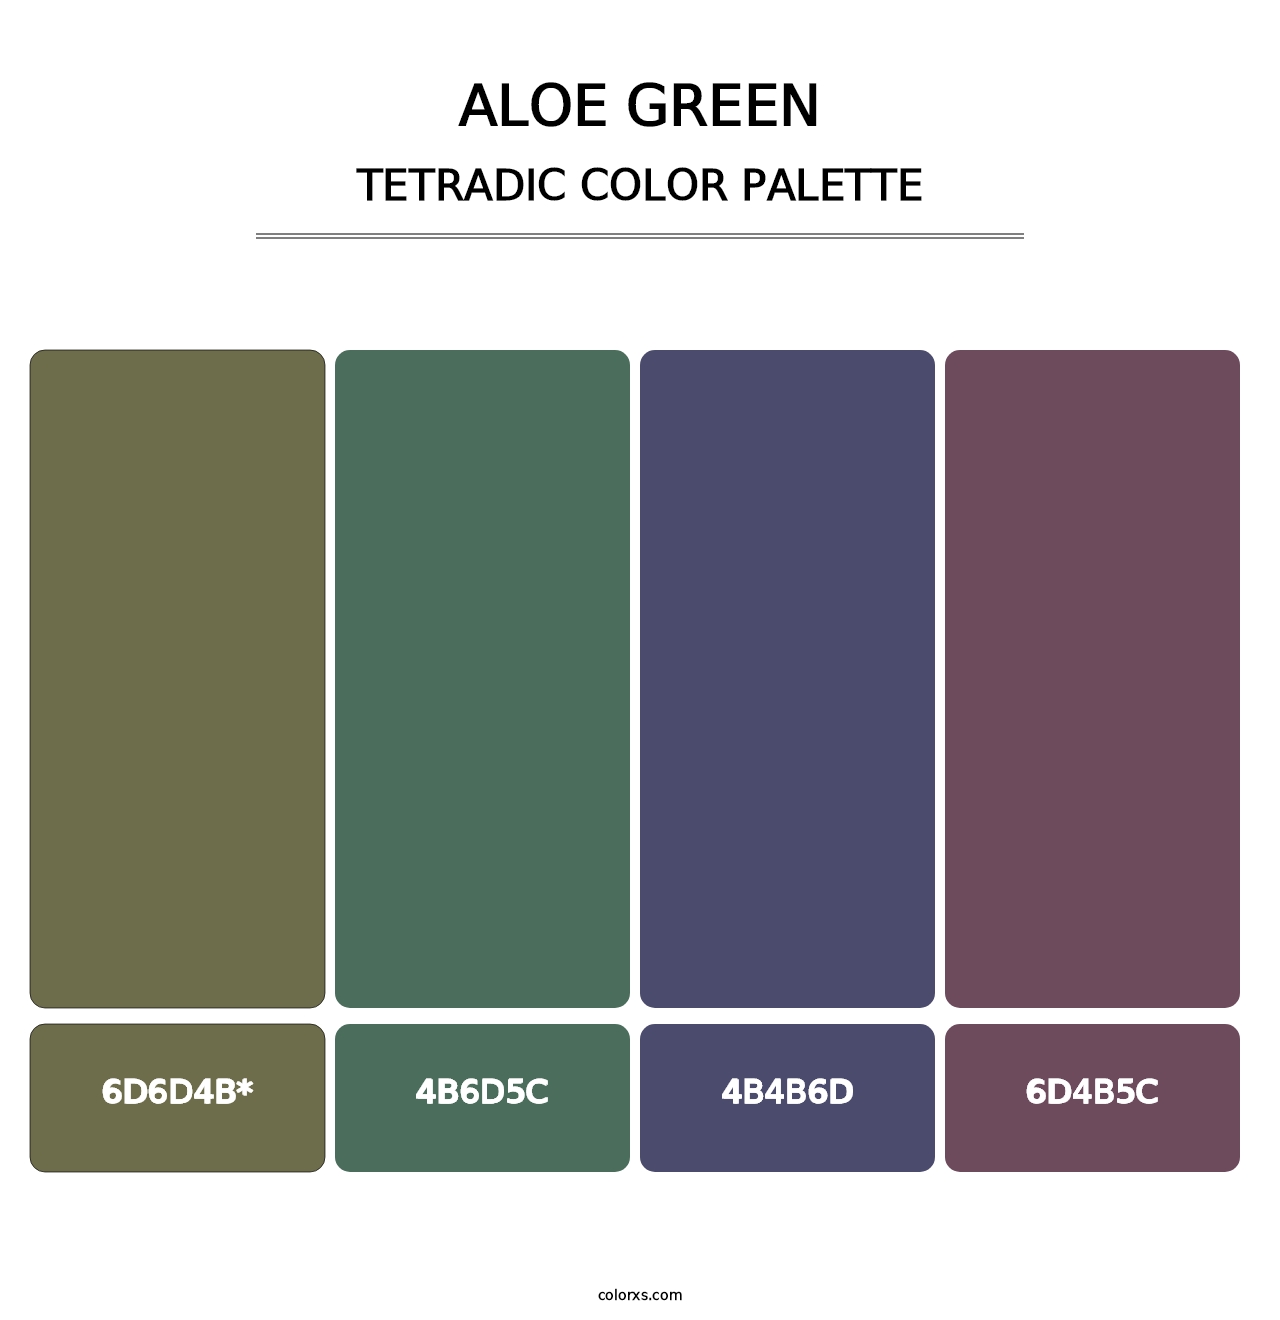 Aloe Green - Tetradic Color Palette